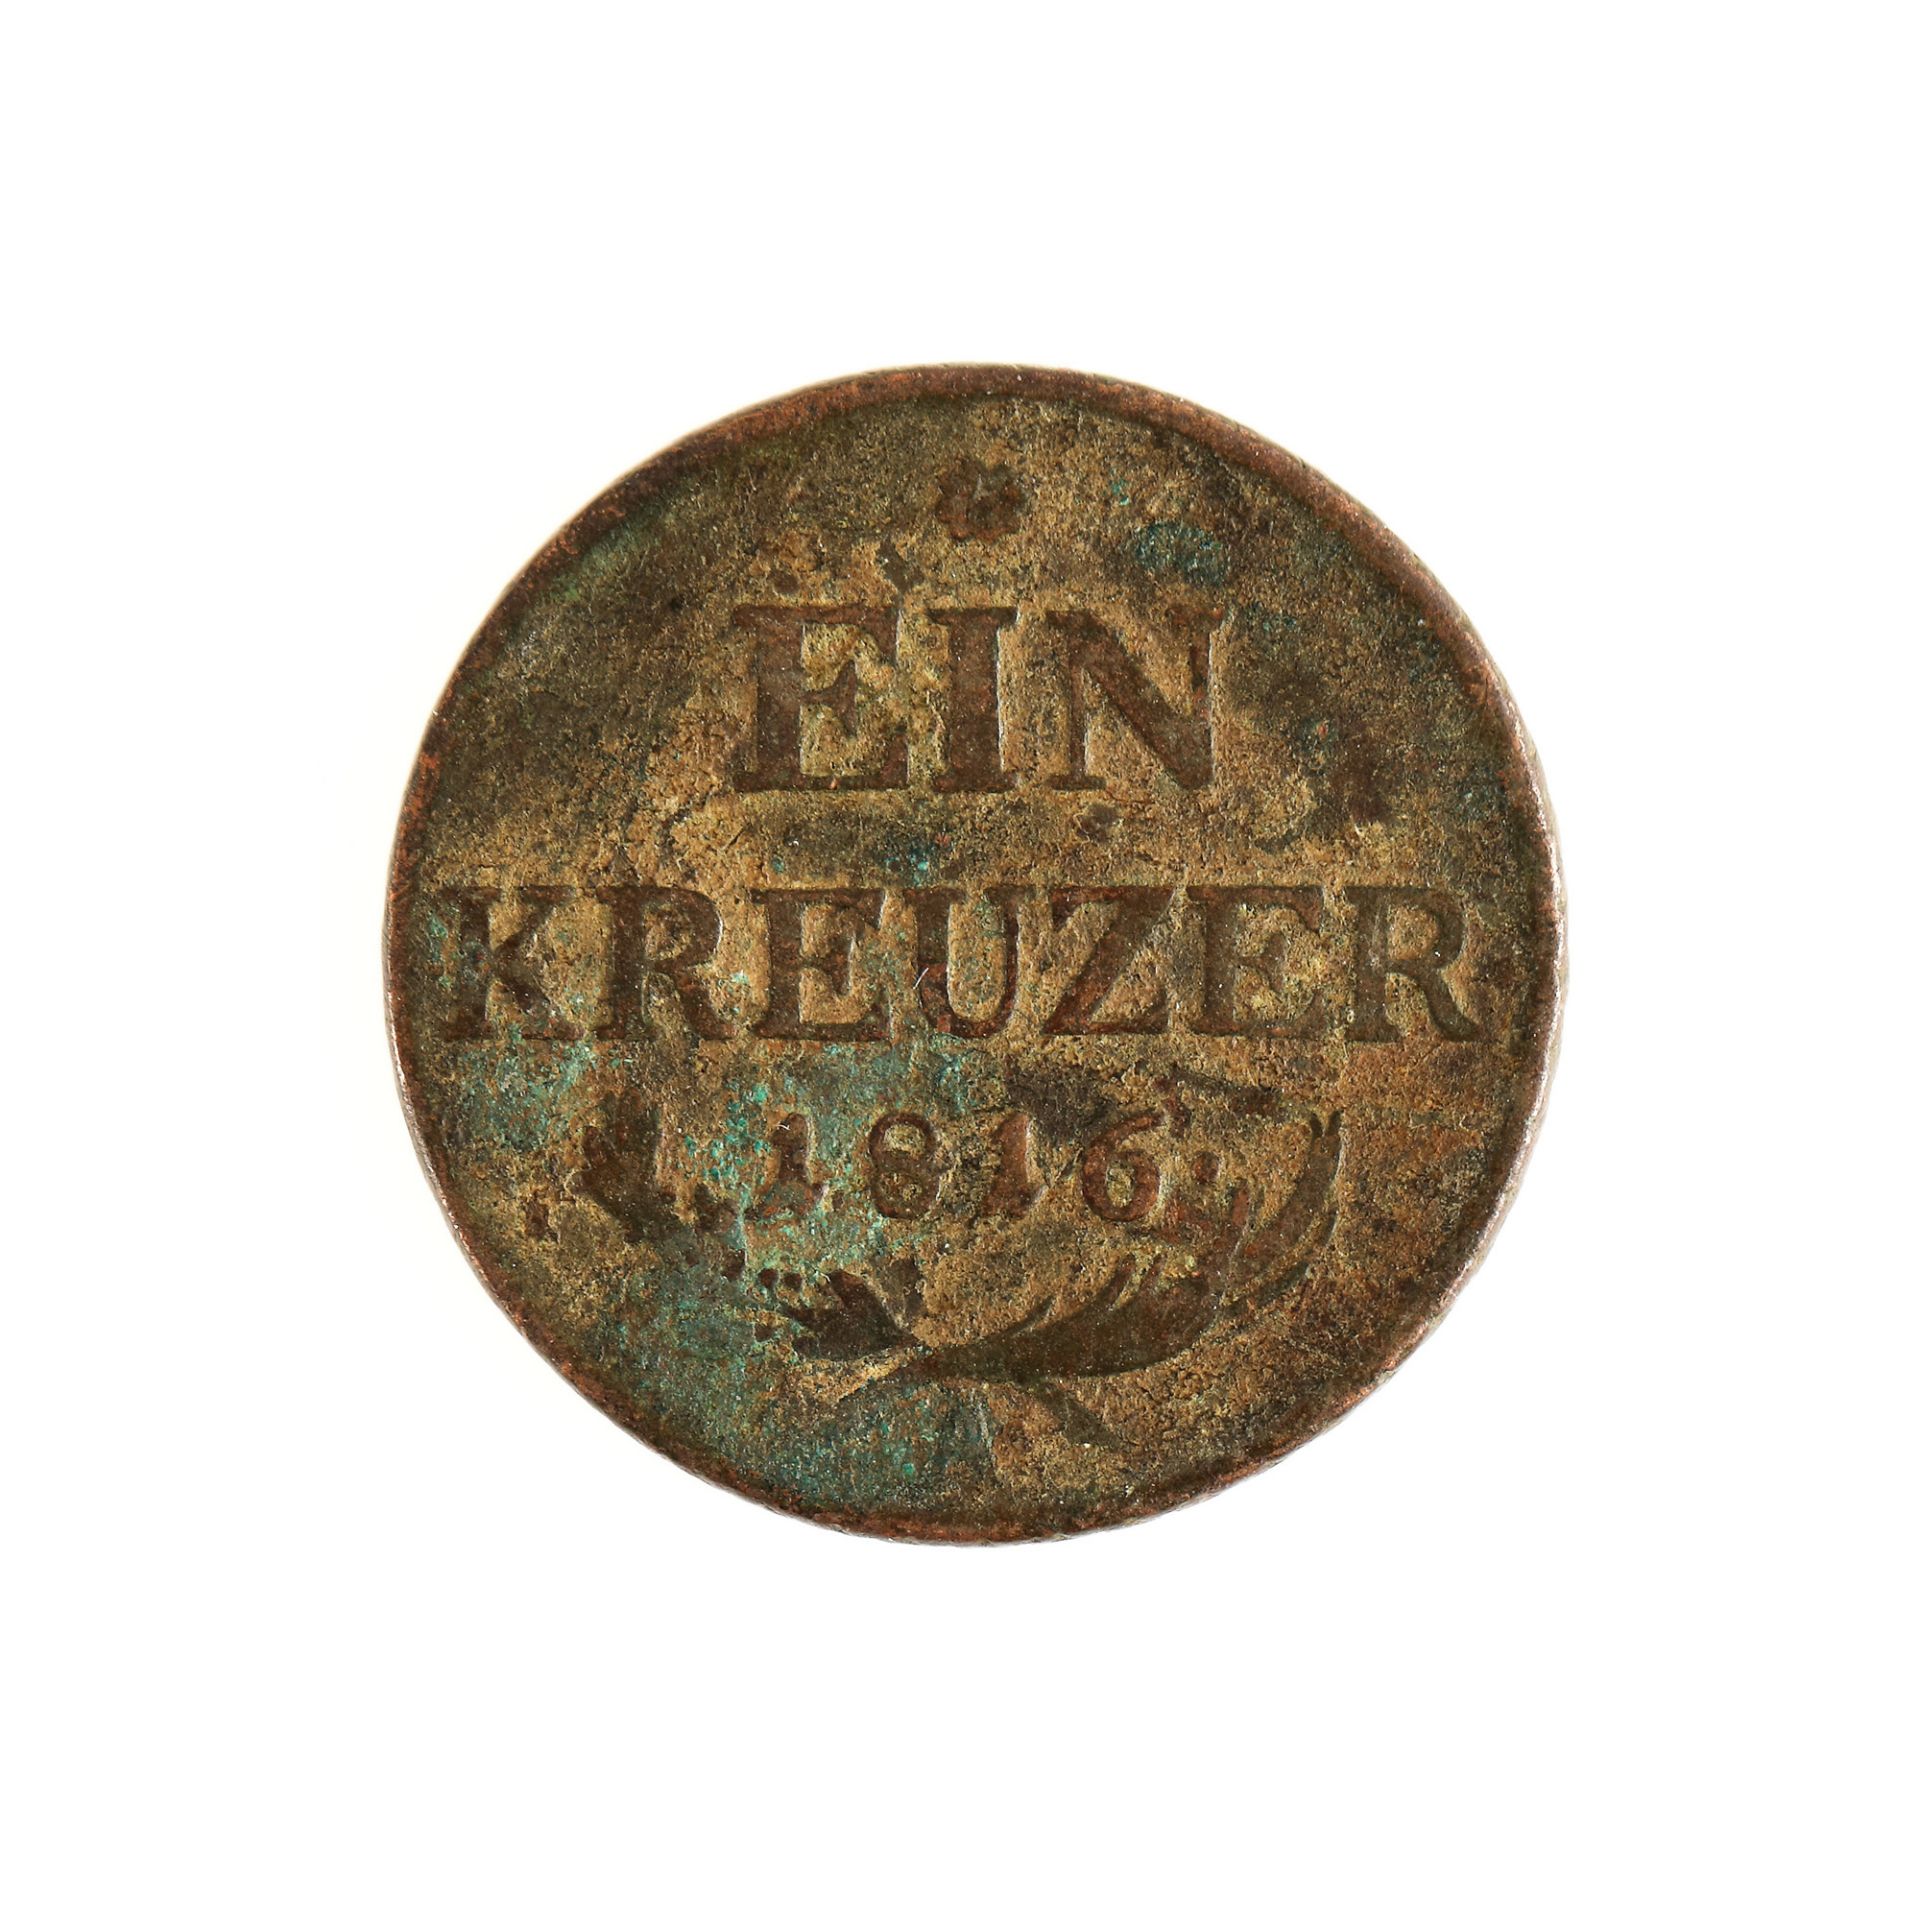 1 Kreuzer coin, Austria, 1816 - Image 2 of 2